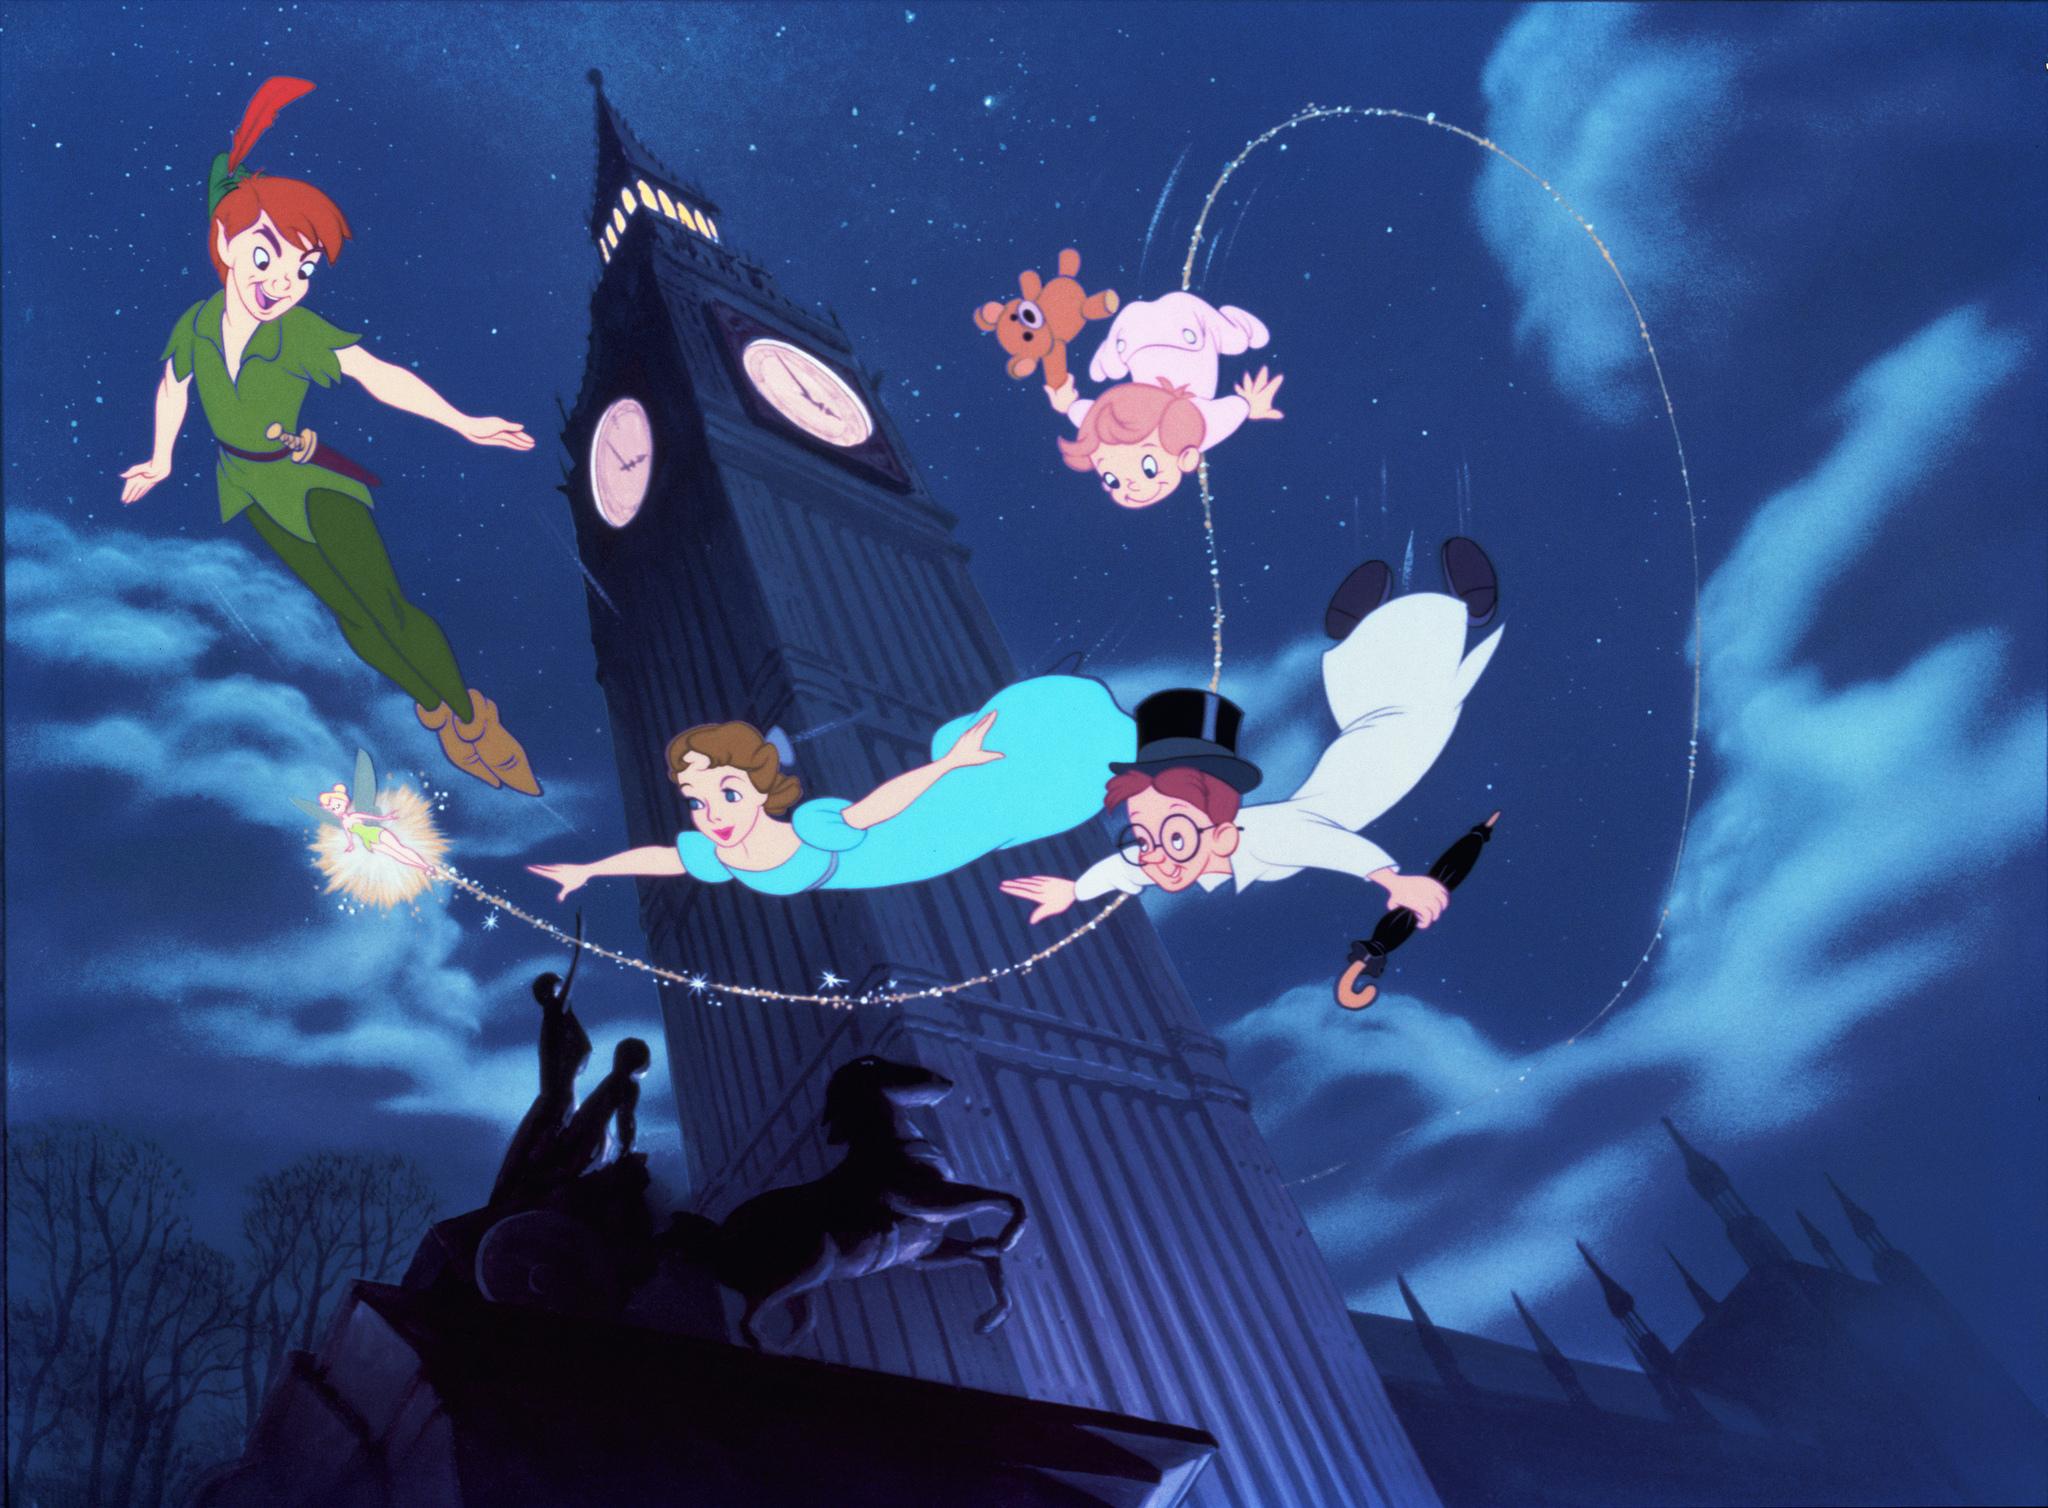 Disney Developing Live-Action Peter Pan